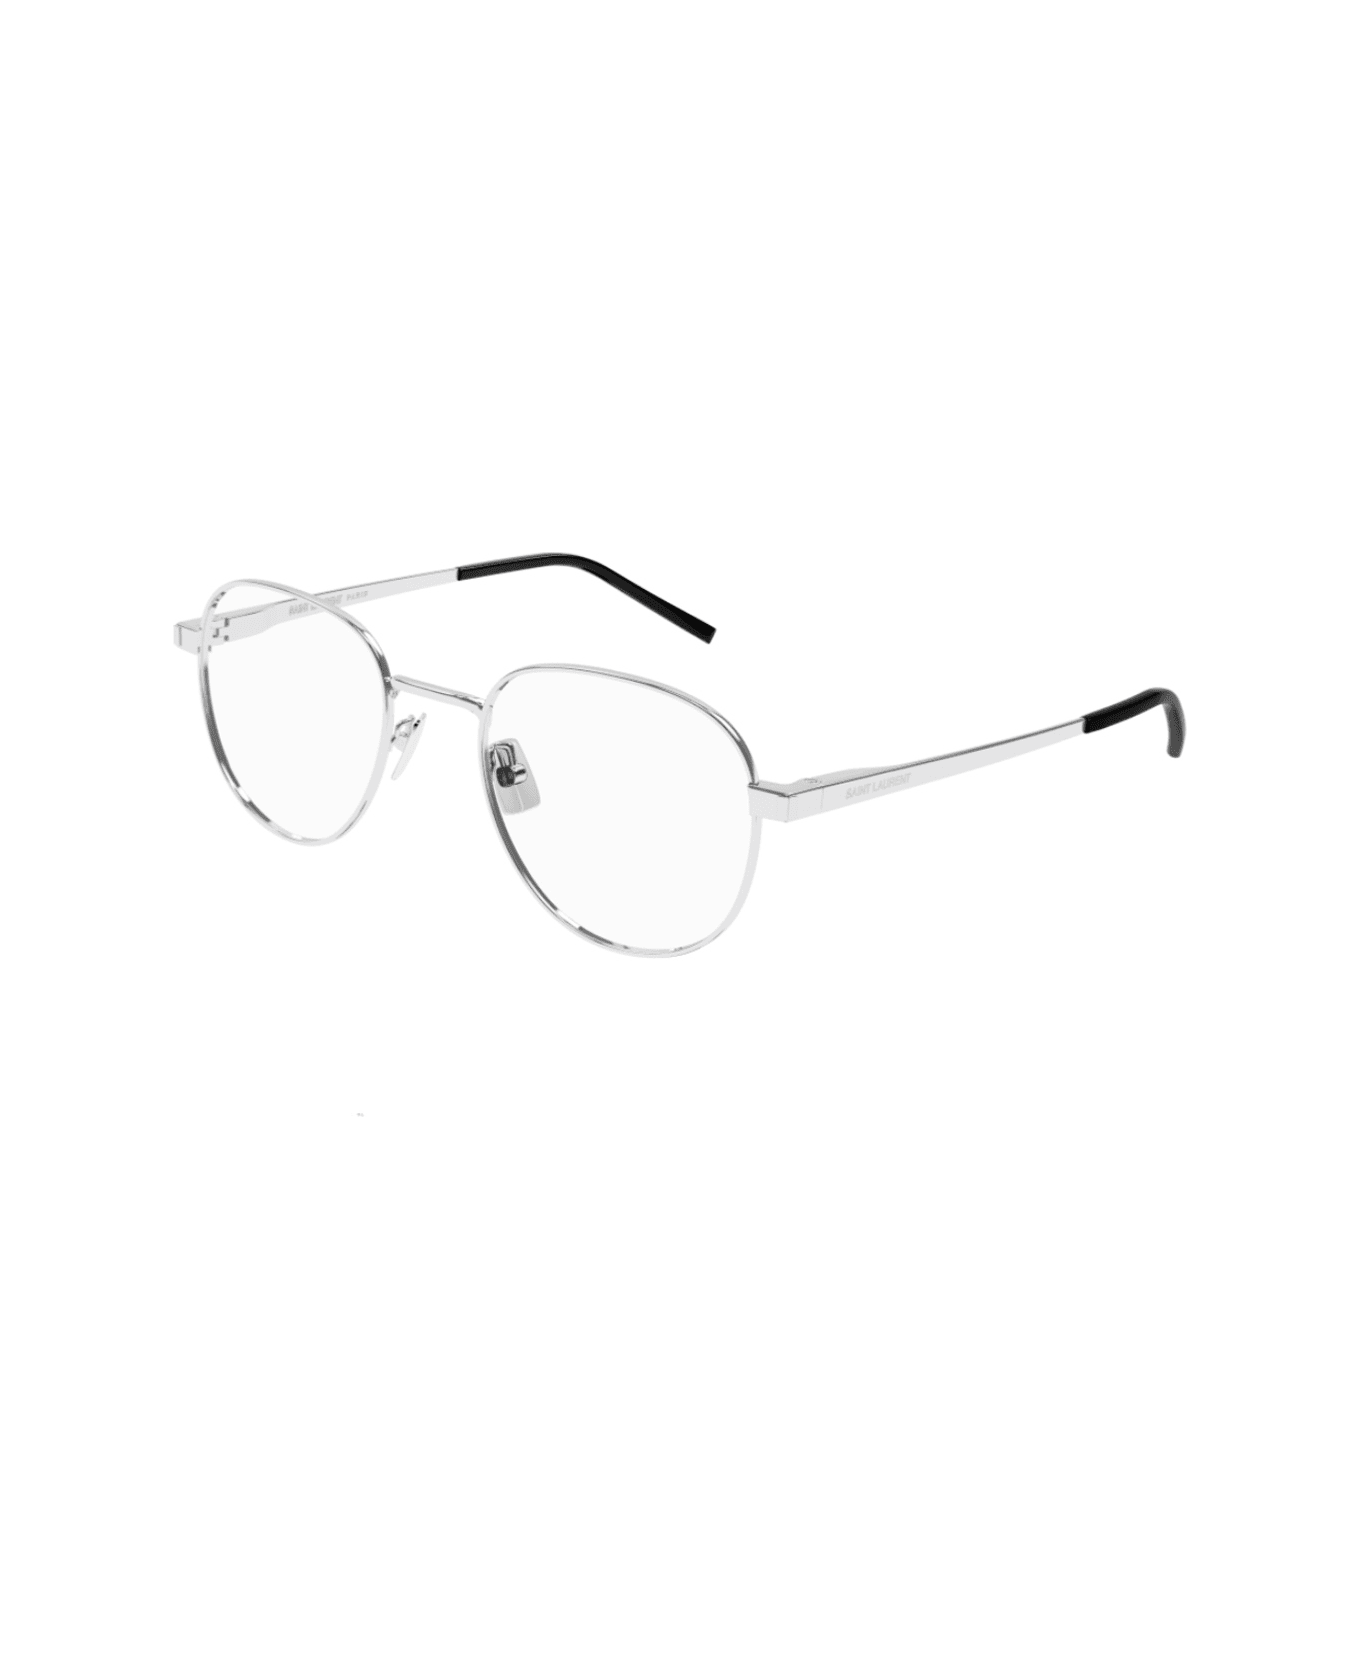 Saint Laurent Eyewear Sl 555 Opt 002 Glasses - Argento